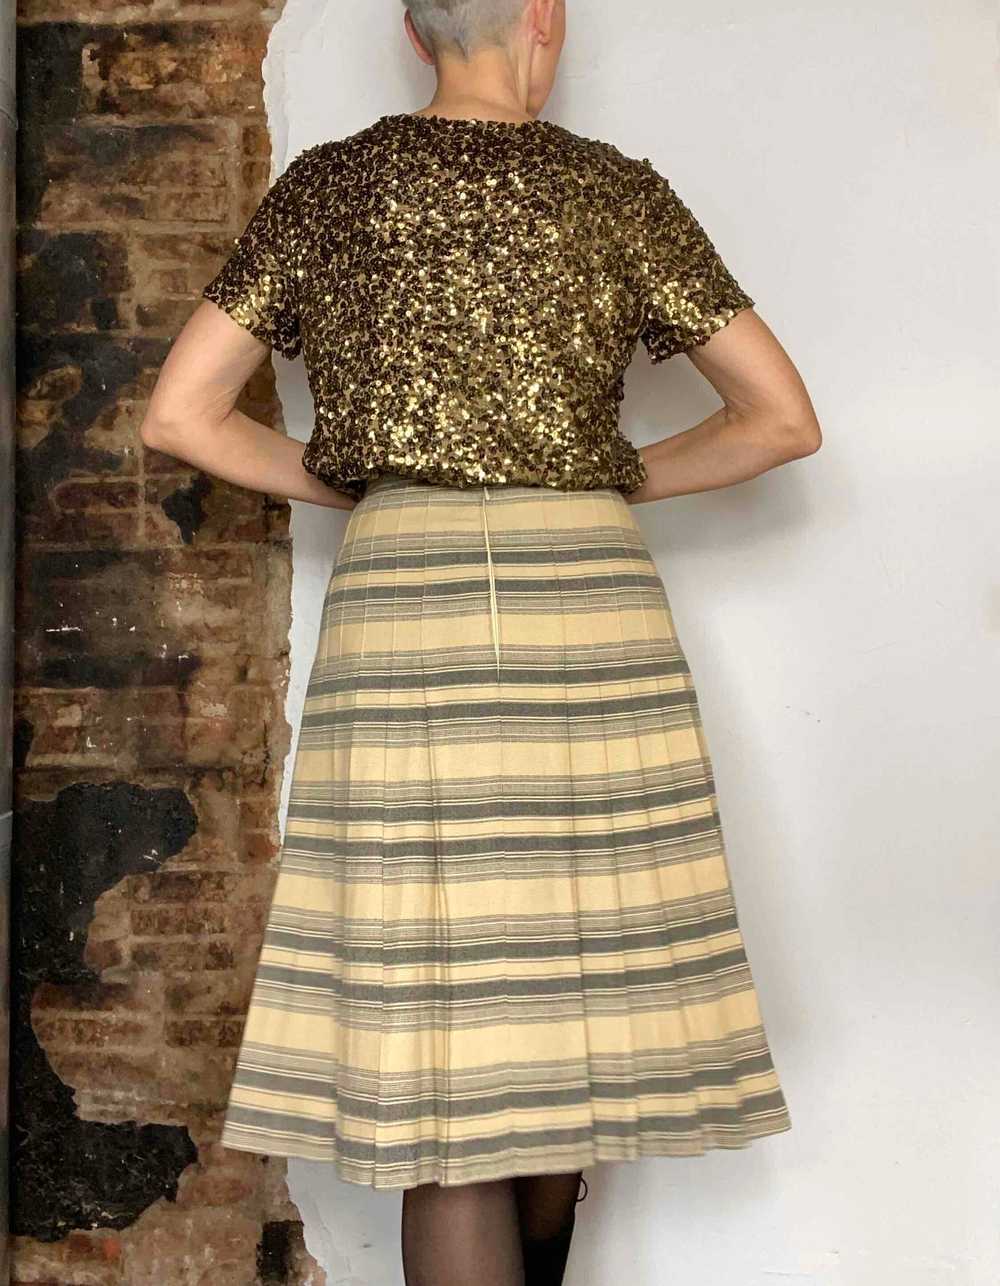 Wool skirt - Scottish plaid skirt from the 70s-80s - image 4